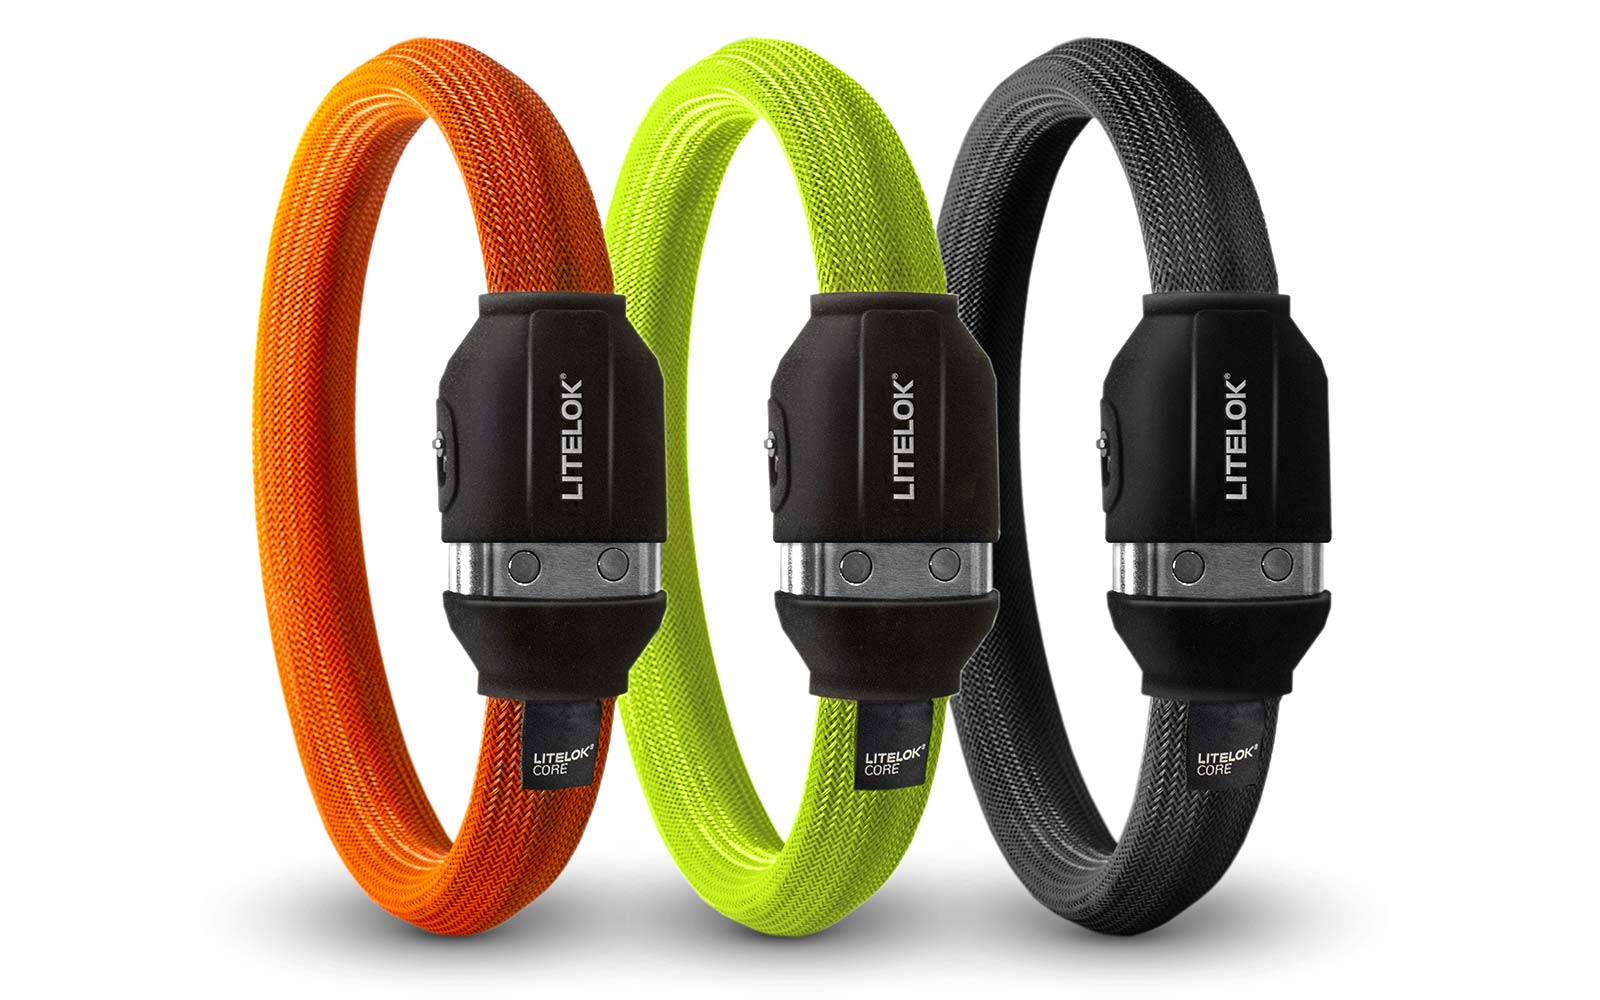 Litelok Core lightweight flexible wearable Sold Secure Bicycle Diamond city bike lock, color options